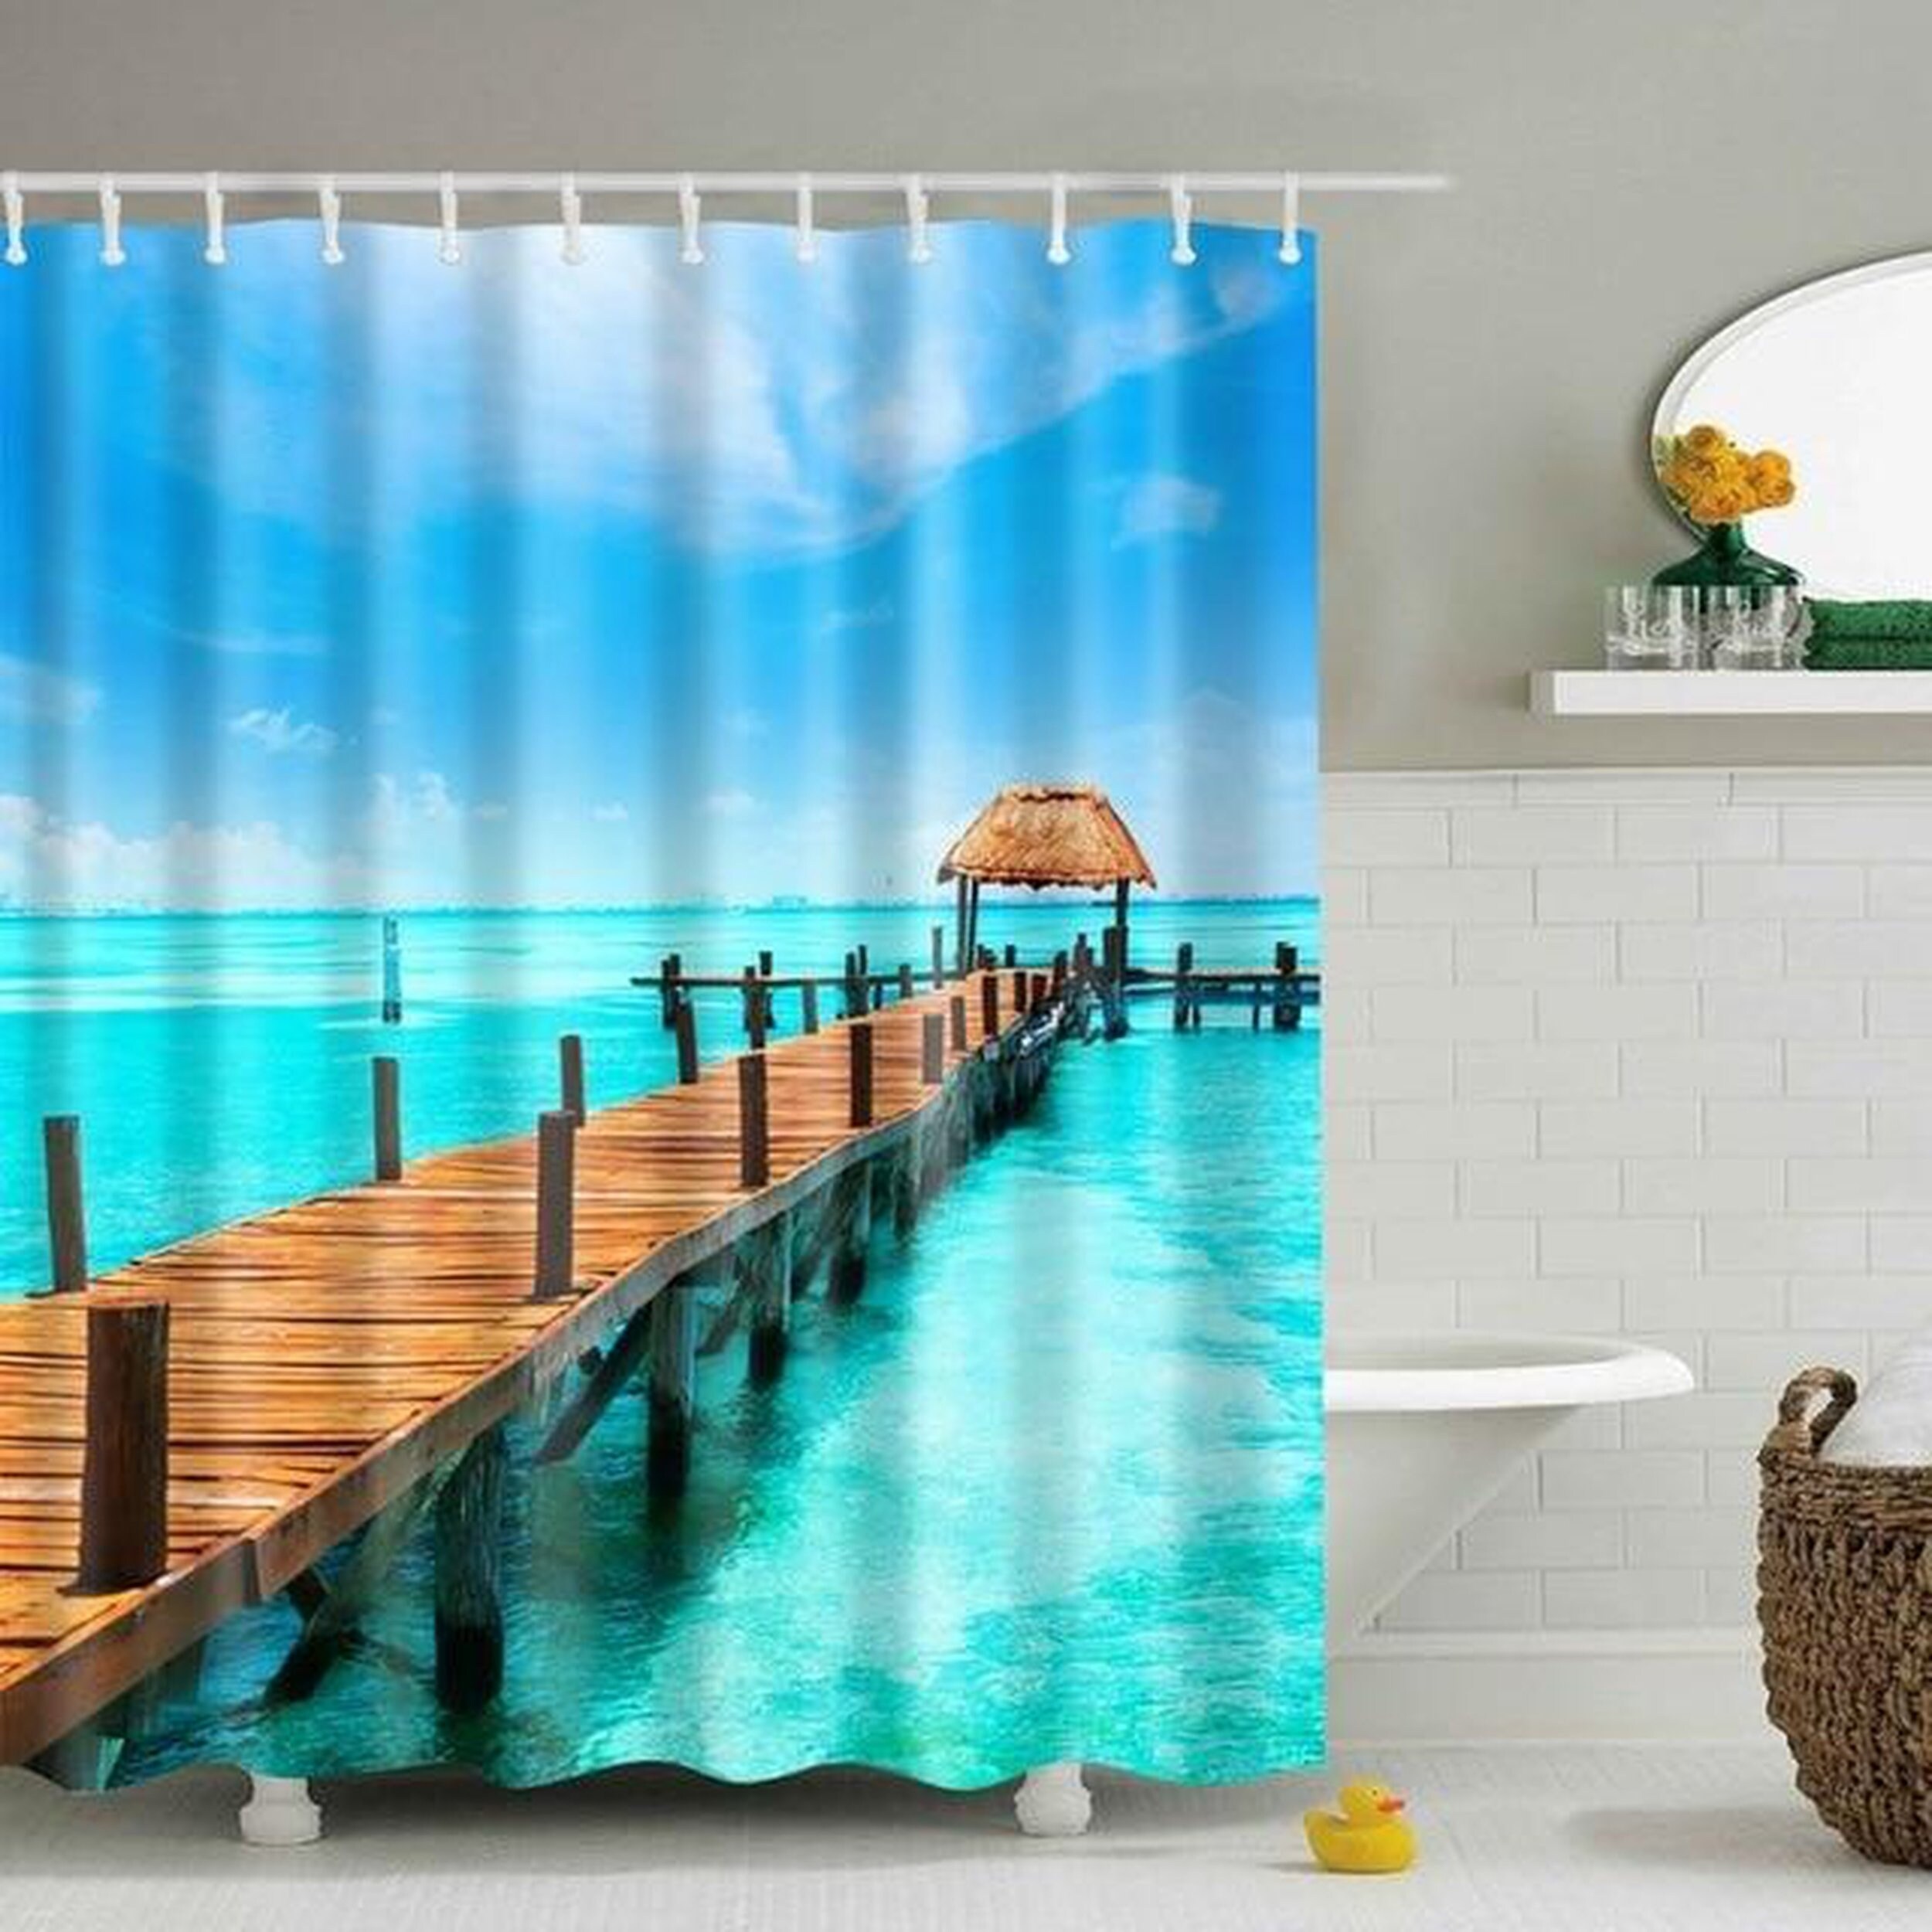 180*180cm Waterproof Fabric Landscape Printed Bathroom Shower Curtain Home Decor 